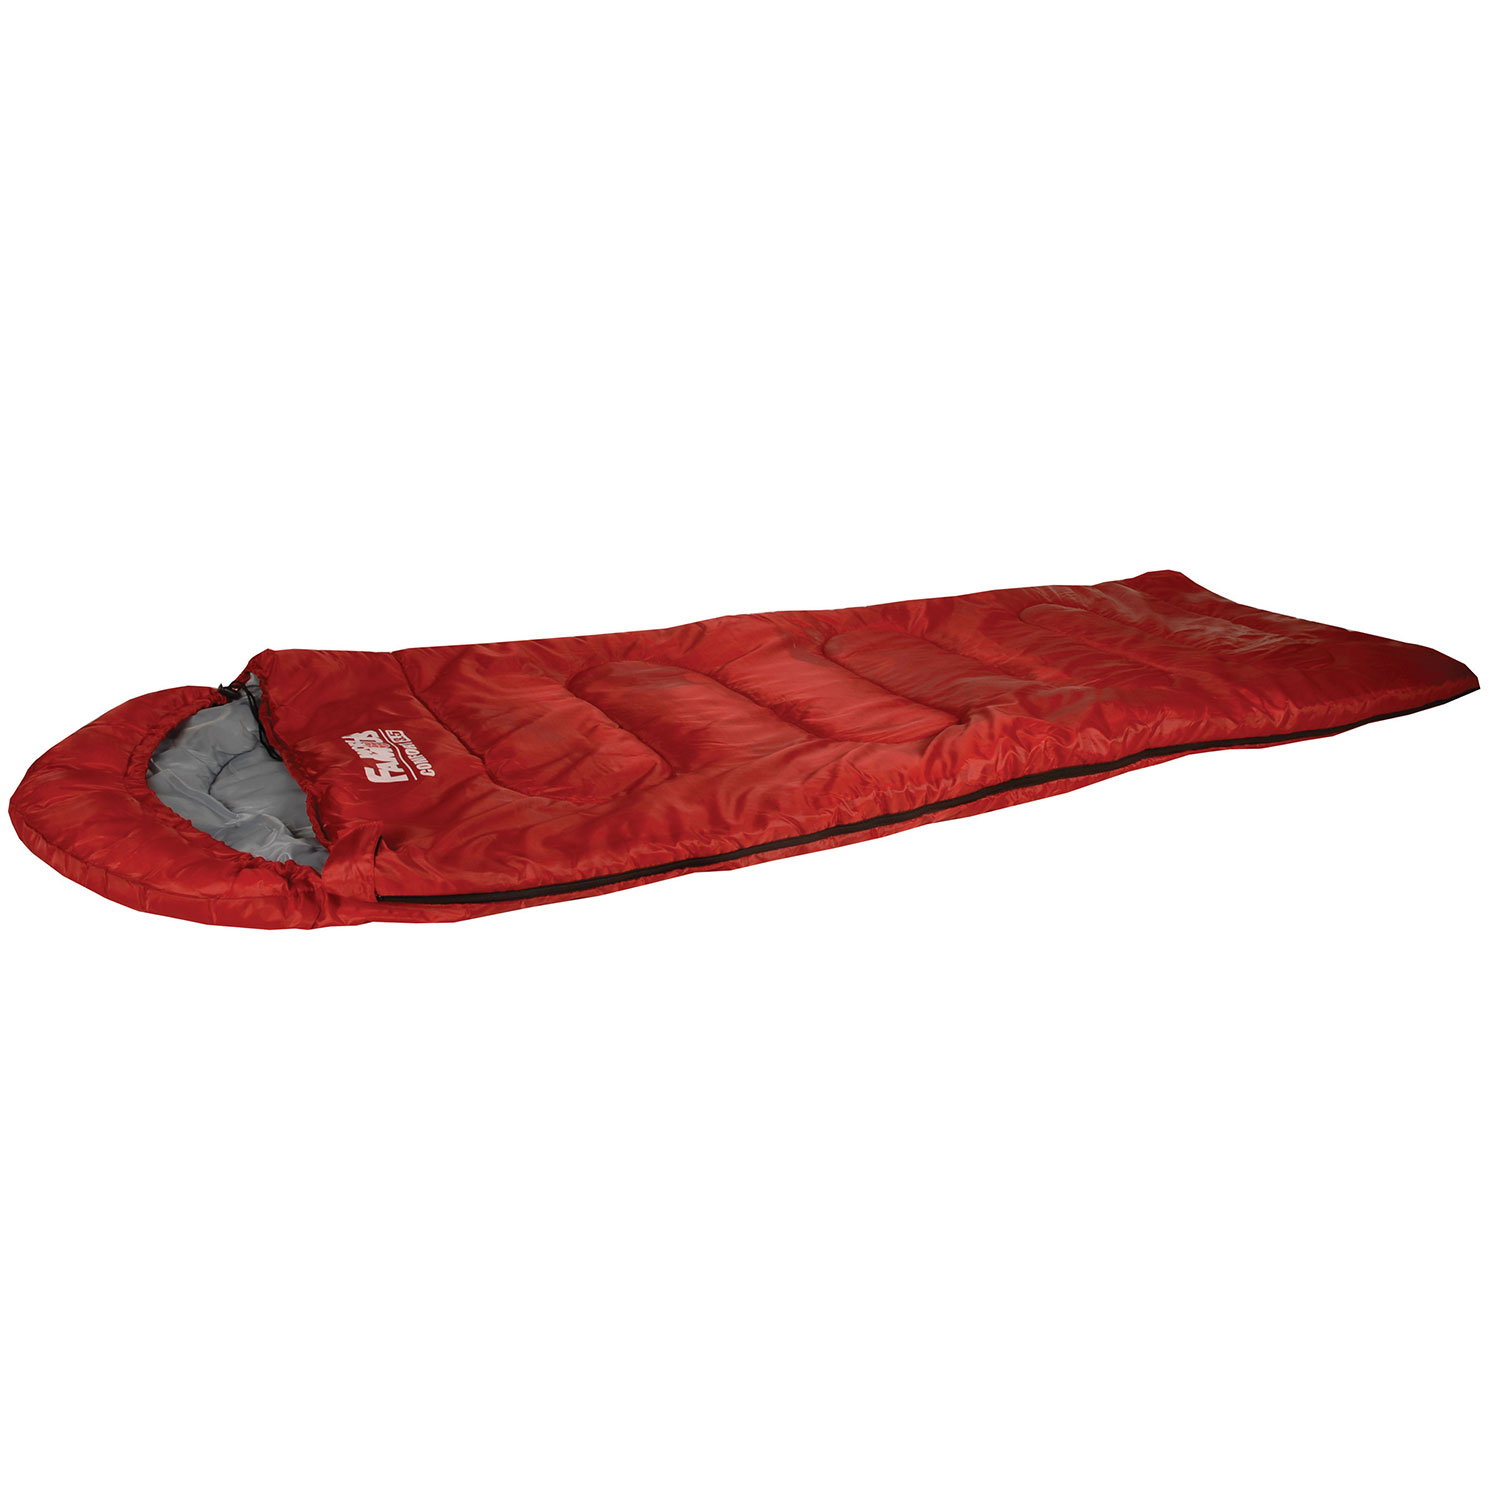 North 49 Comfort 3.5 Rectangular 3-Degrees Celcius Sleeping Bag - Red